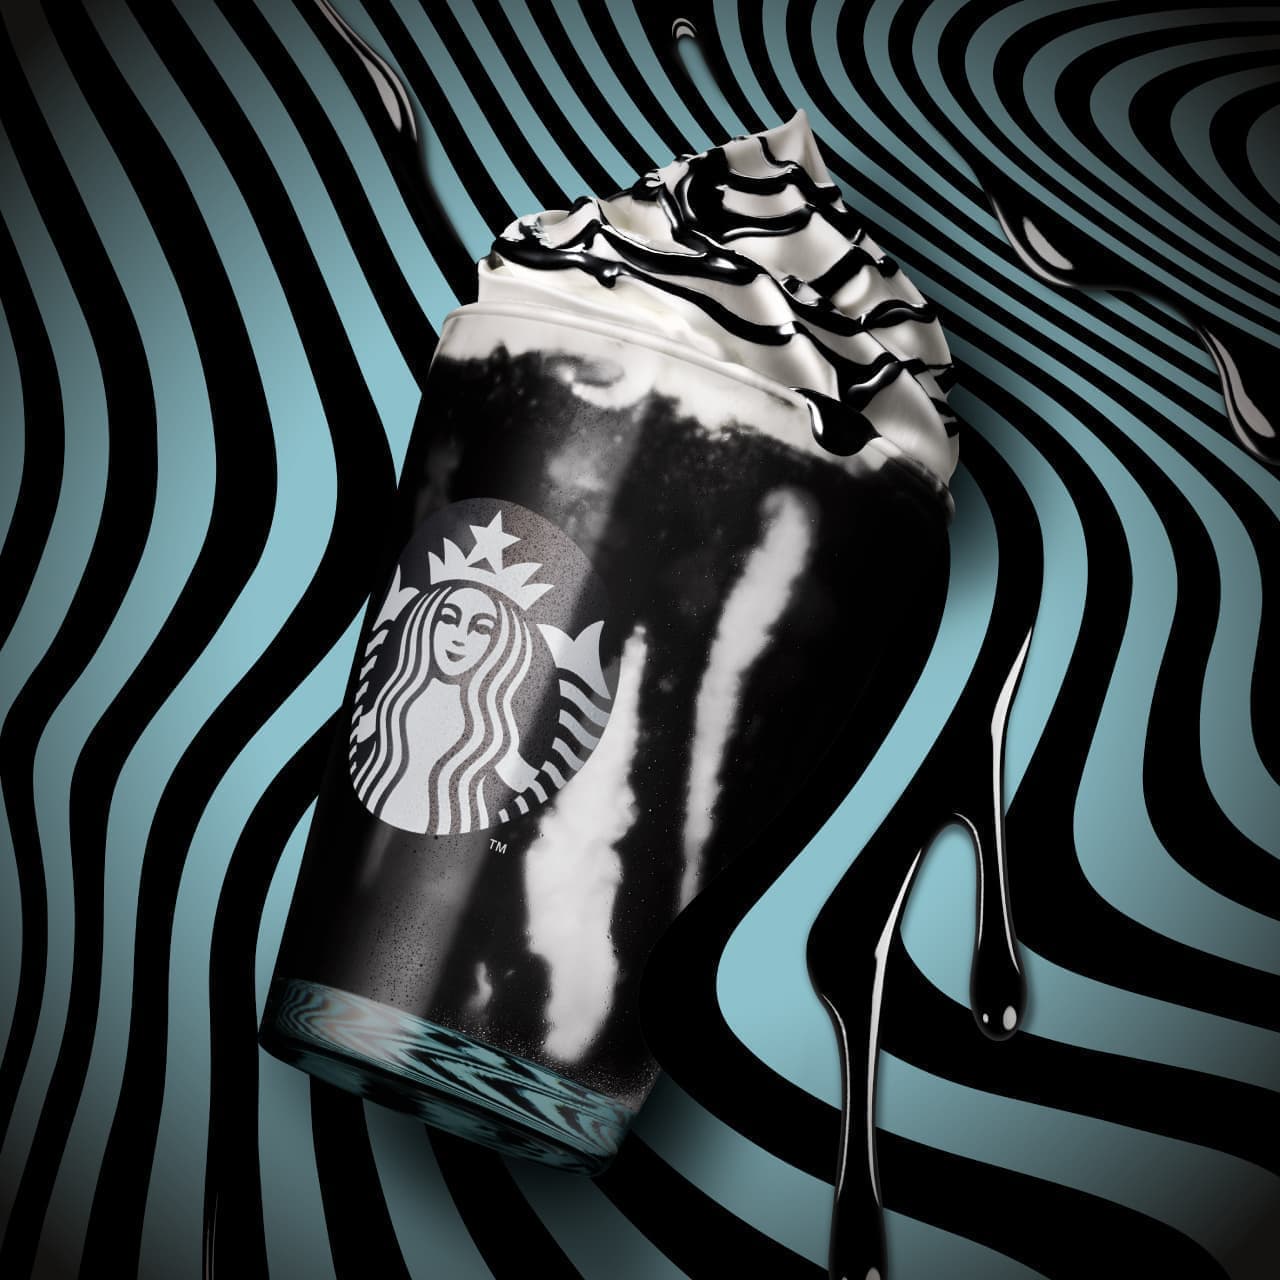 Exclusive "Booooo Customization" to Starbucks Frappuccinos